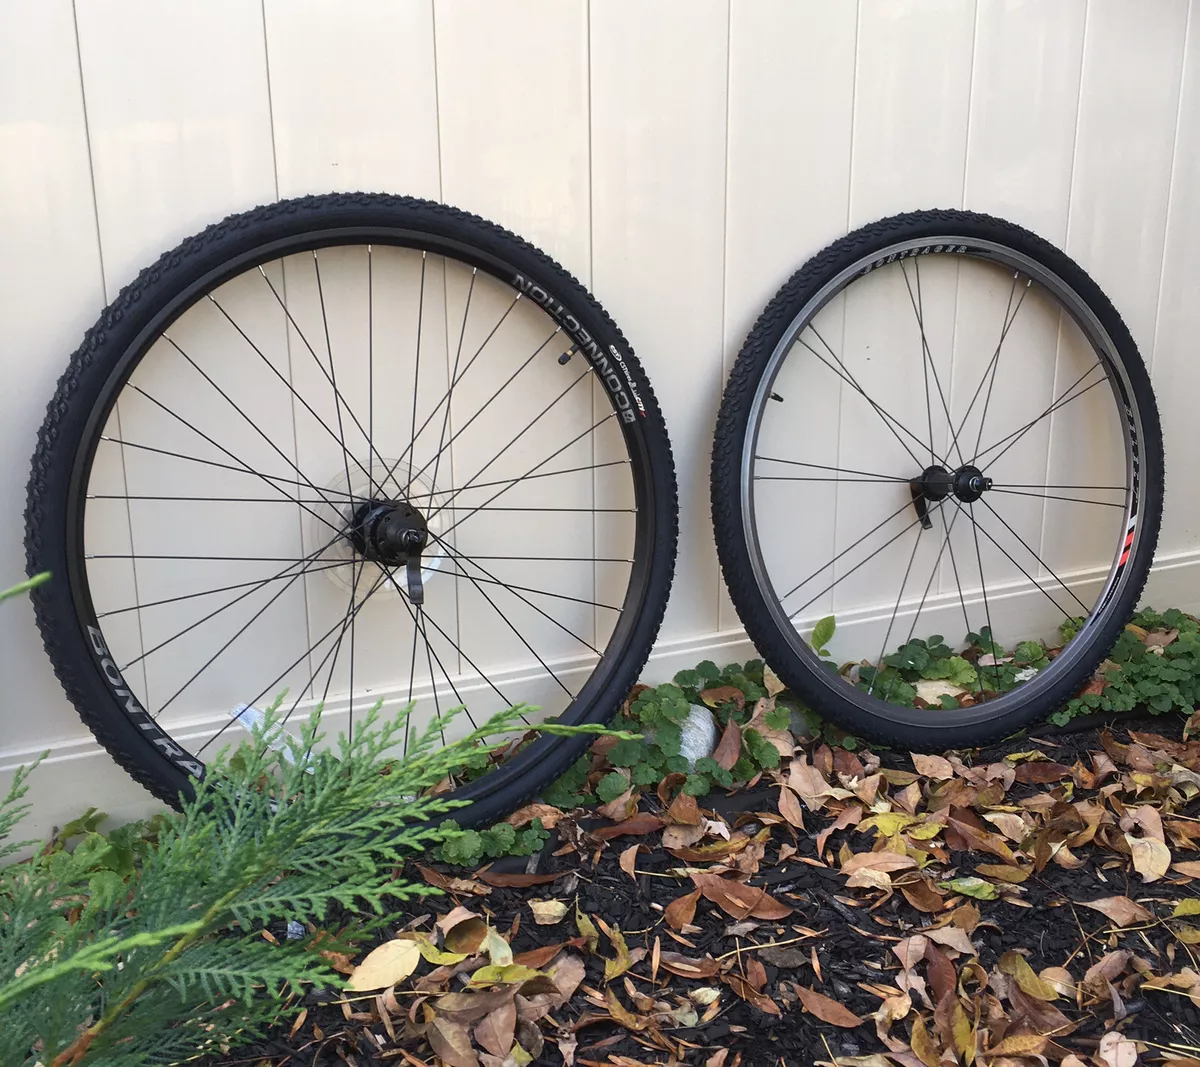 700x38c bike tires